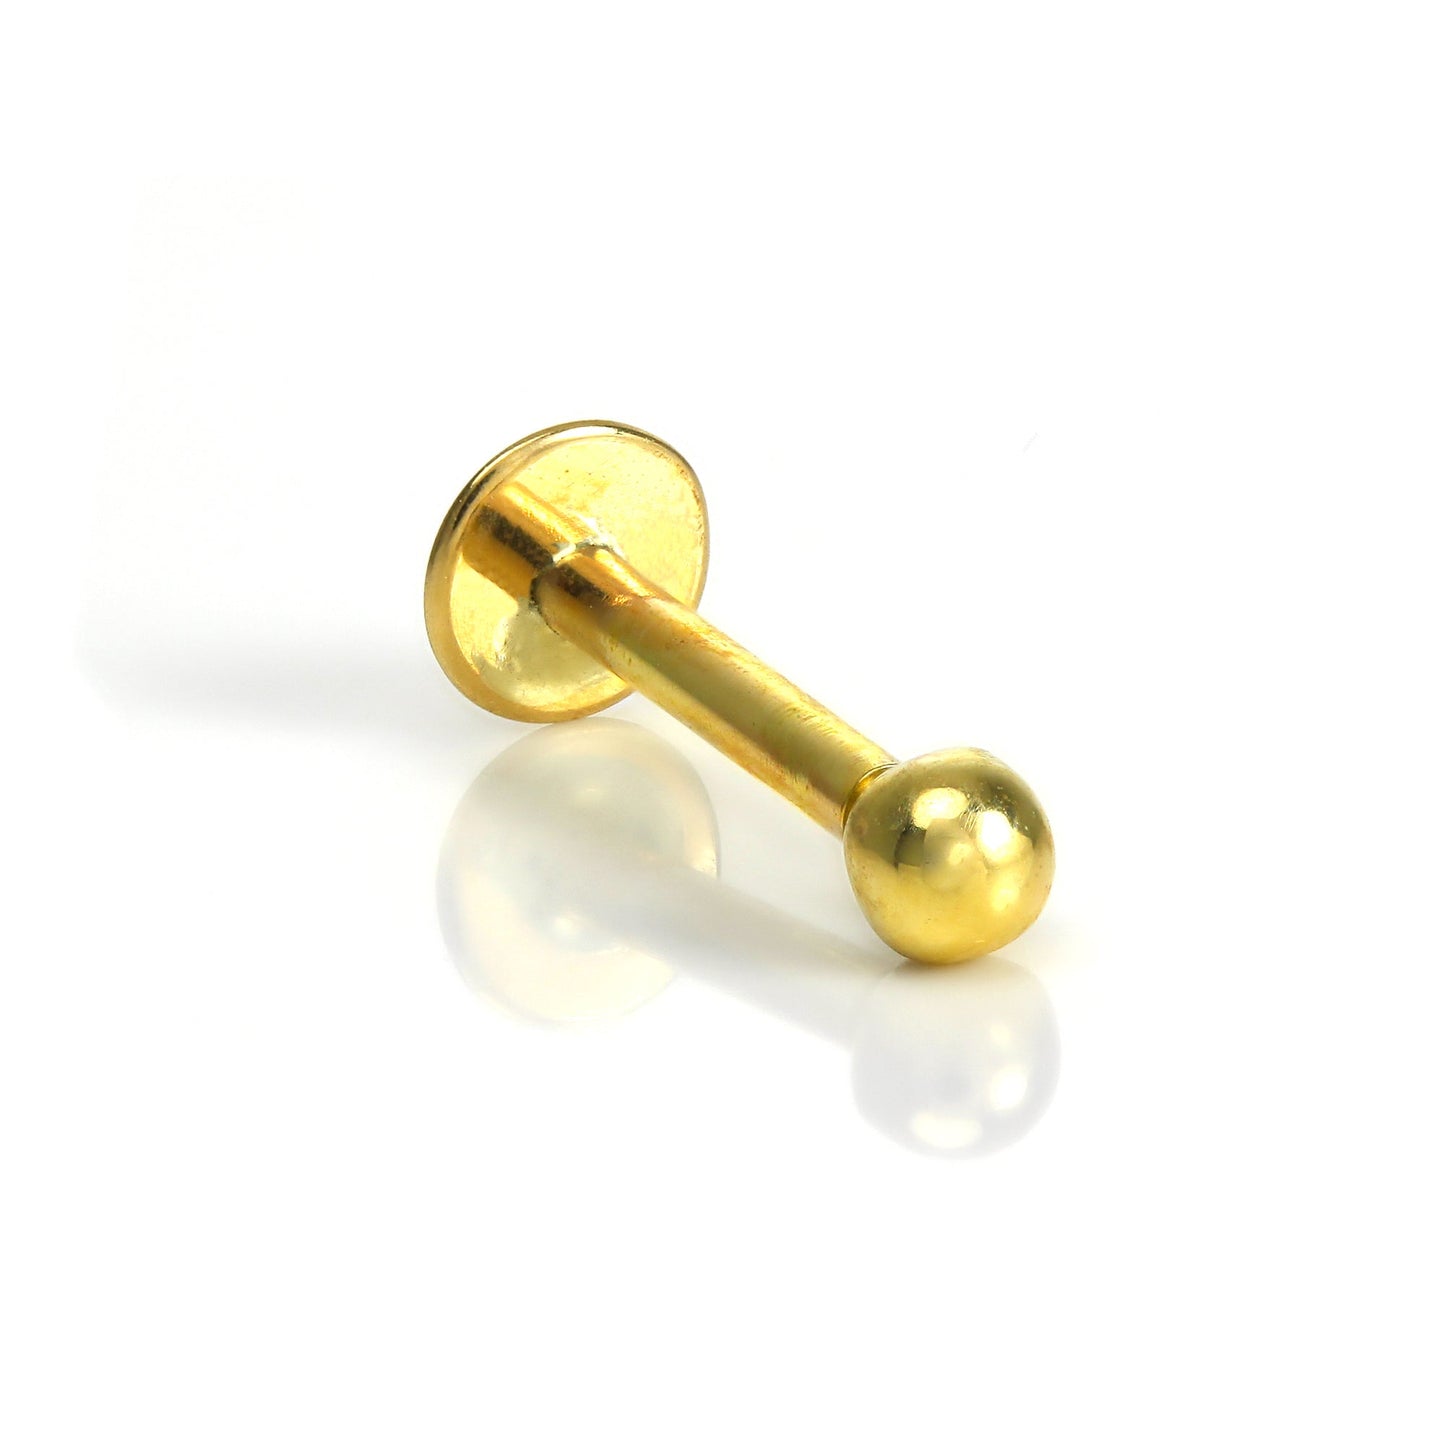 9 Karat Gold Massiv 2,5mm Kugelende Lippenpflock Helix